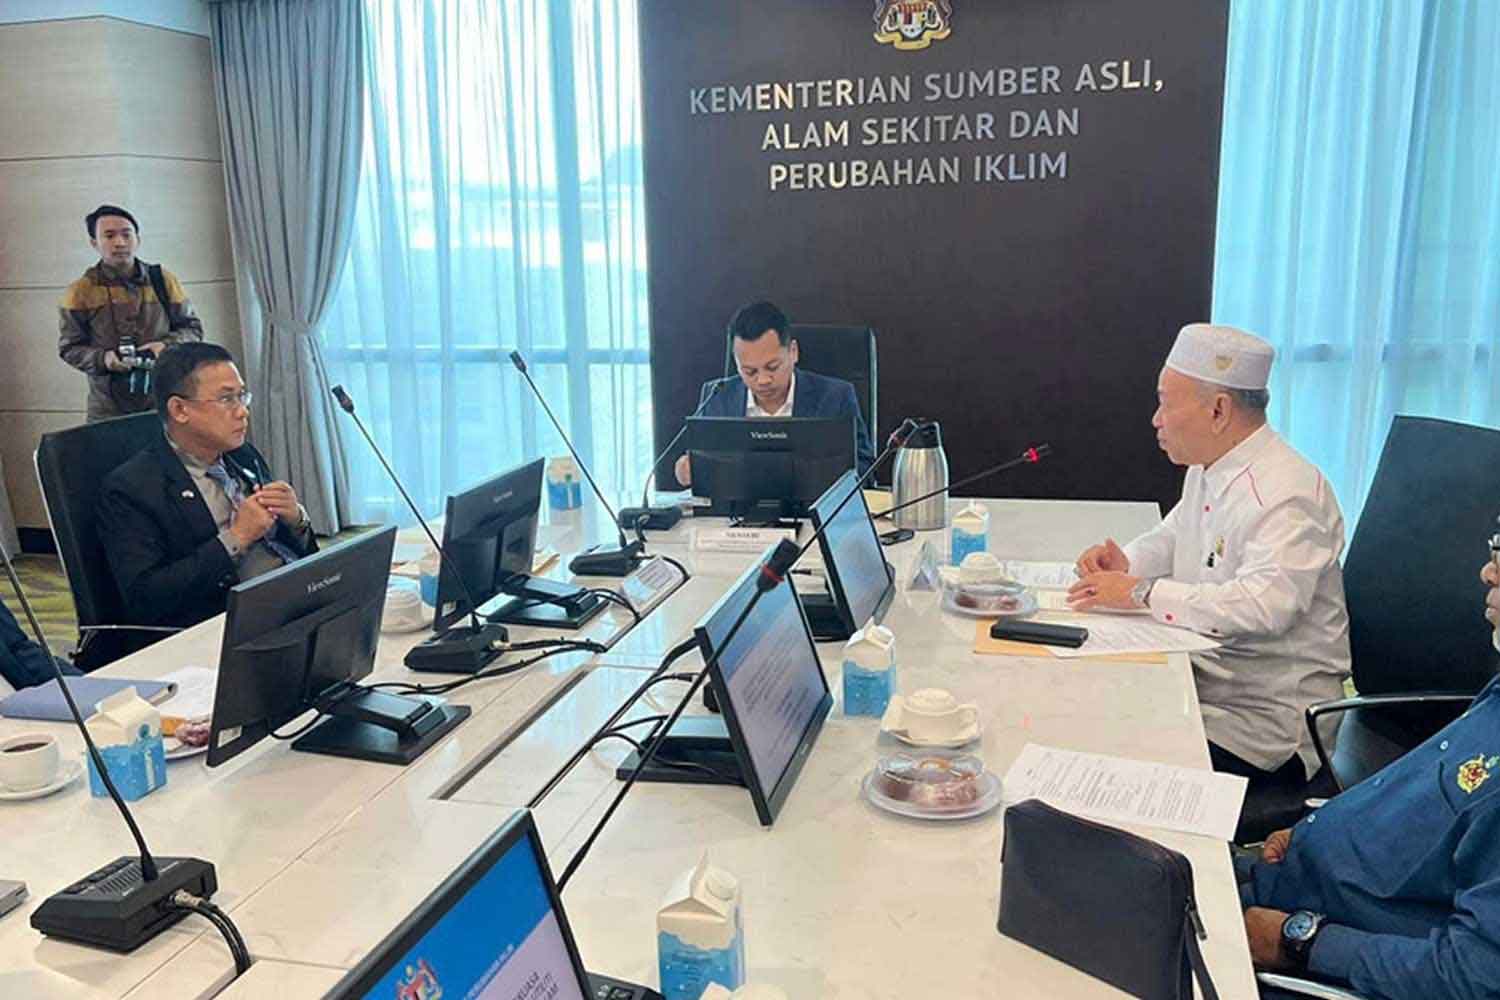 Exco kerja raya jumpa Menteri di Putrajaya, sekali kena 'sekolah' kes AKSB